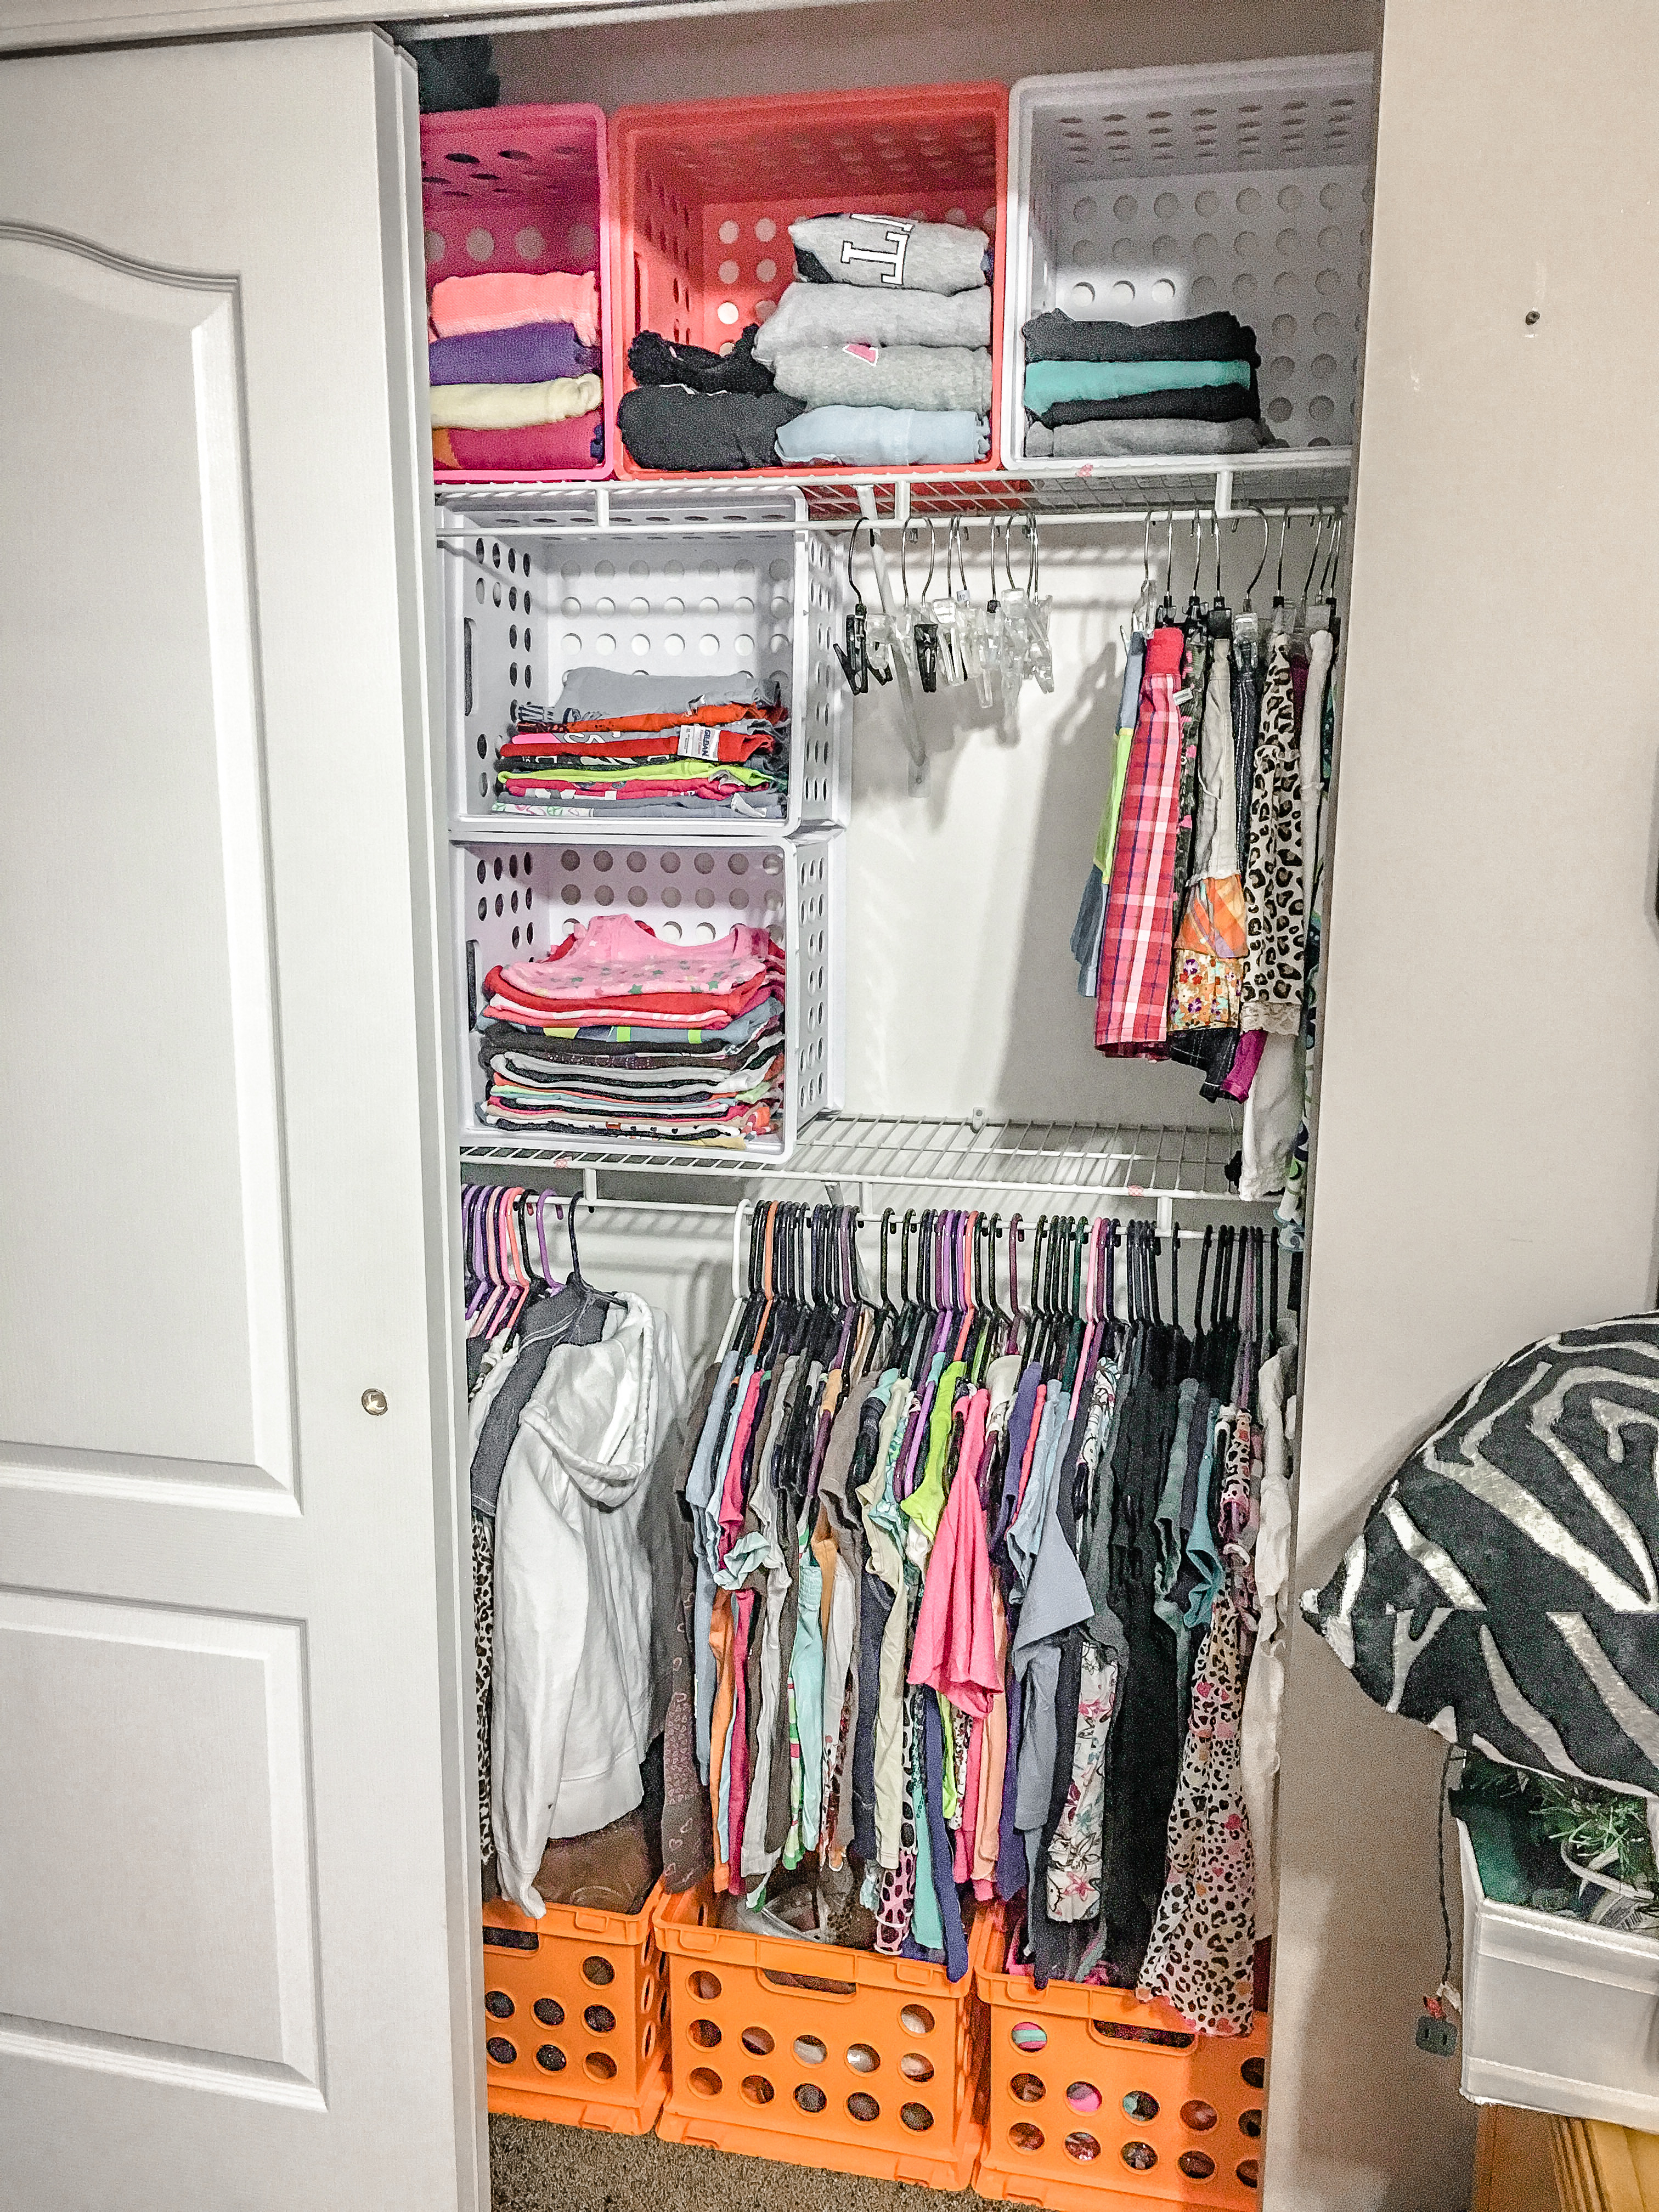 Best ideas about DIY Closet Organizer Cheap
. Save or Pin trashouttuesday DIY kids closet organization – quick Now.